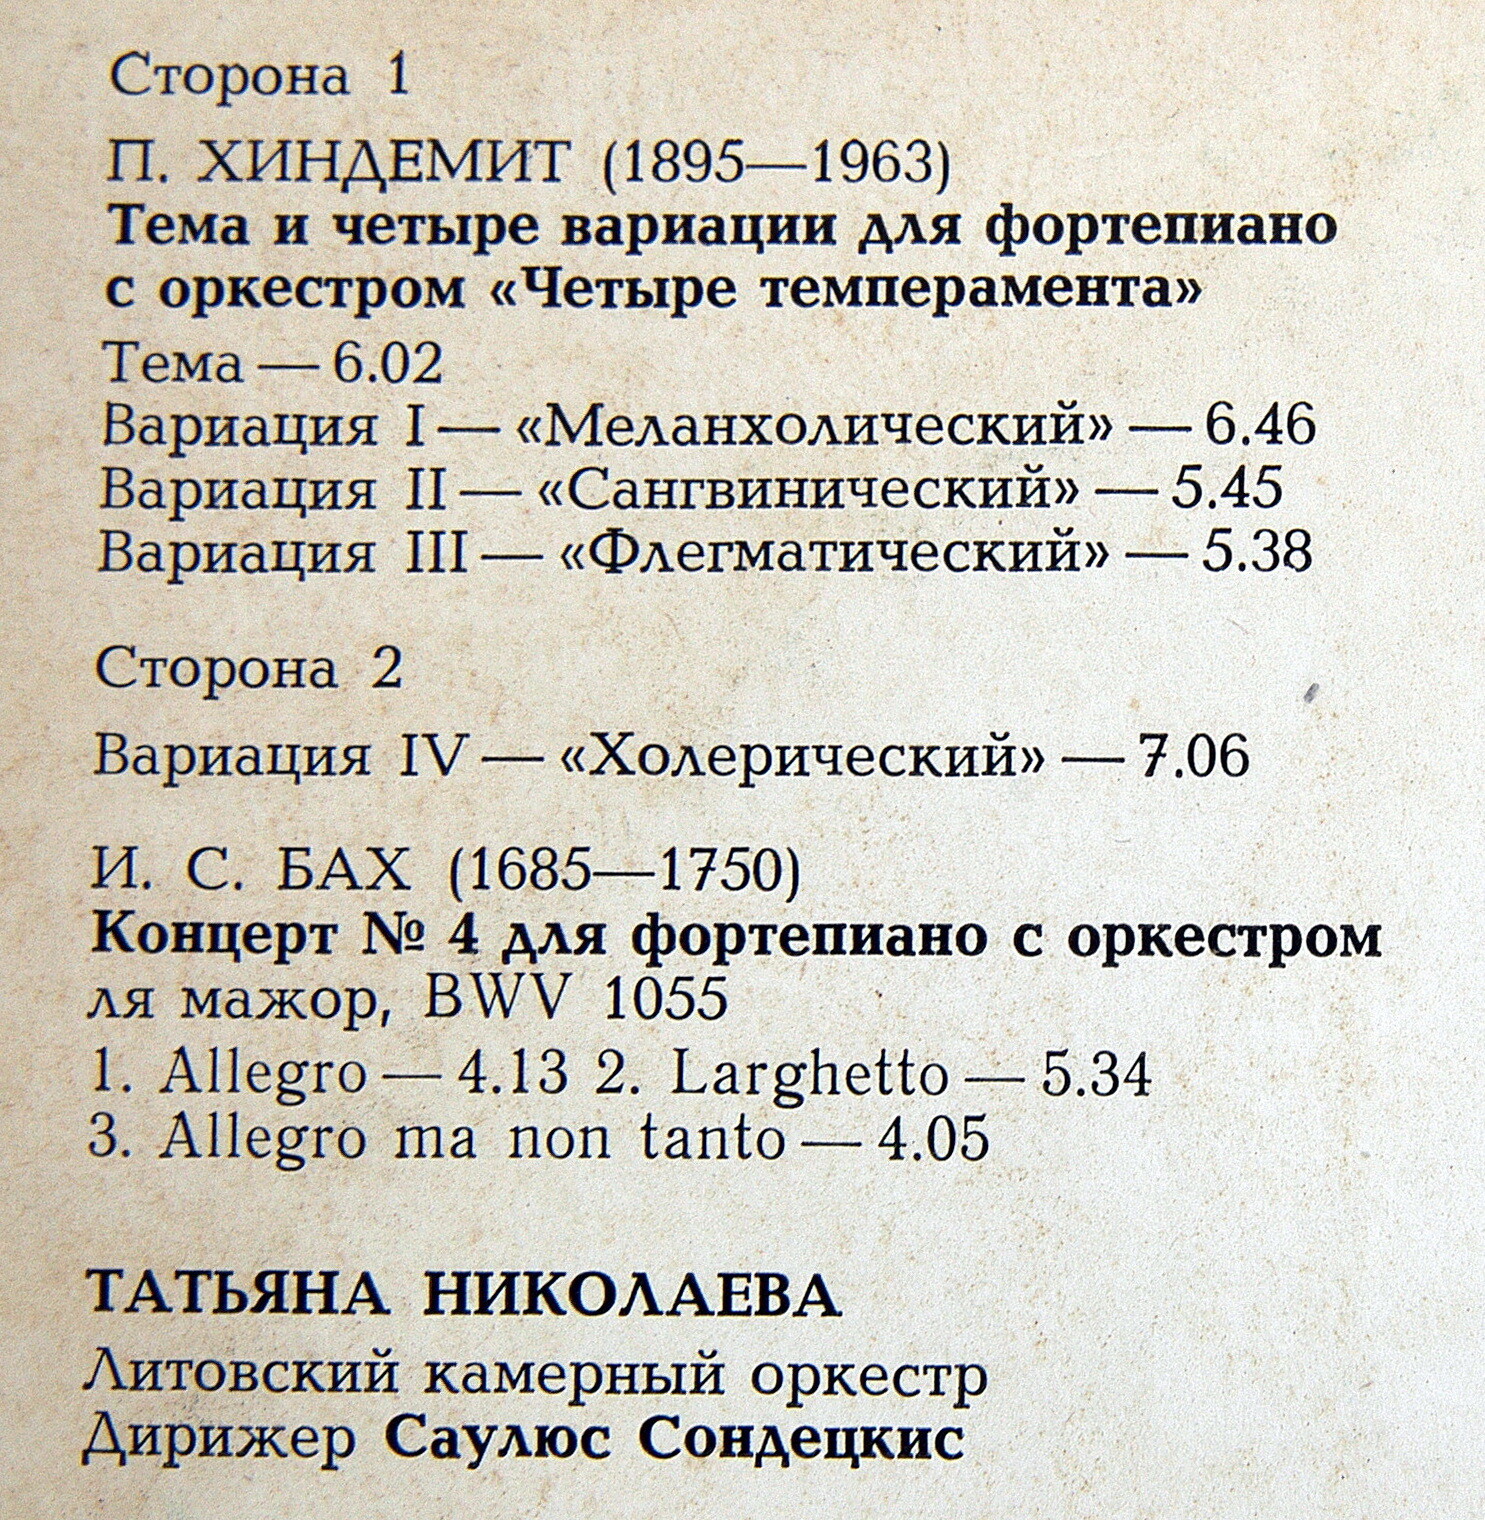 П. ХИНДЕМИТ (1895-1963) Тема и четыре вариации для ф-но / И.С. БАХ  Концерт №4 для ф-но с оркестром (Т. Николаева, С. Сондецкис)